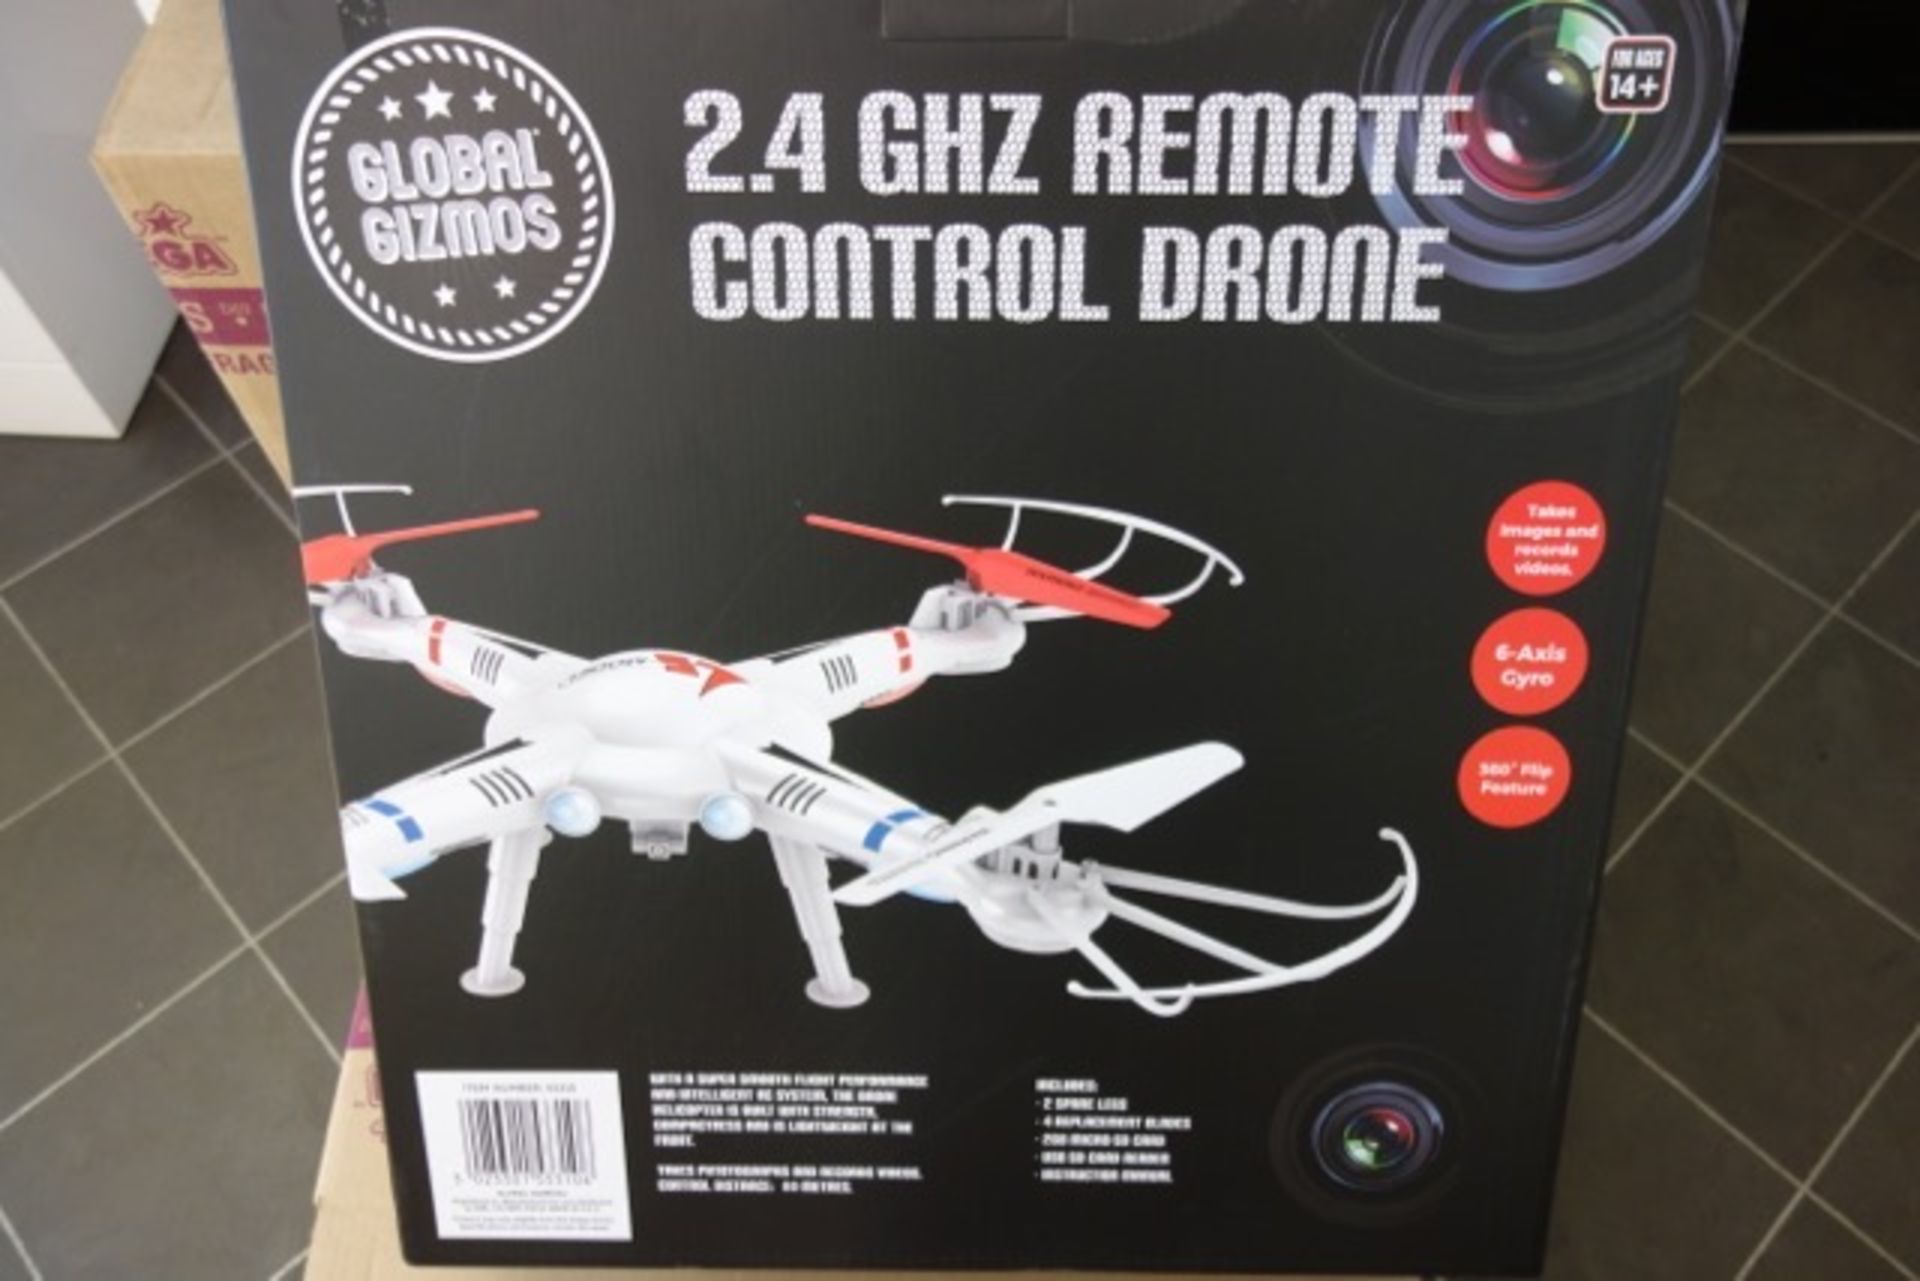 1 x Brand New Global Gizmos 2.4GHZ Remote Control Drone. Takes images & recordes videos, 6 axis - Bild 3 aus 4